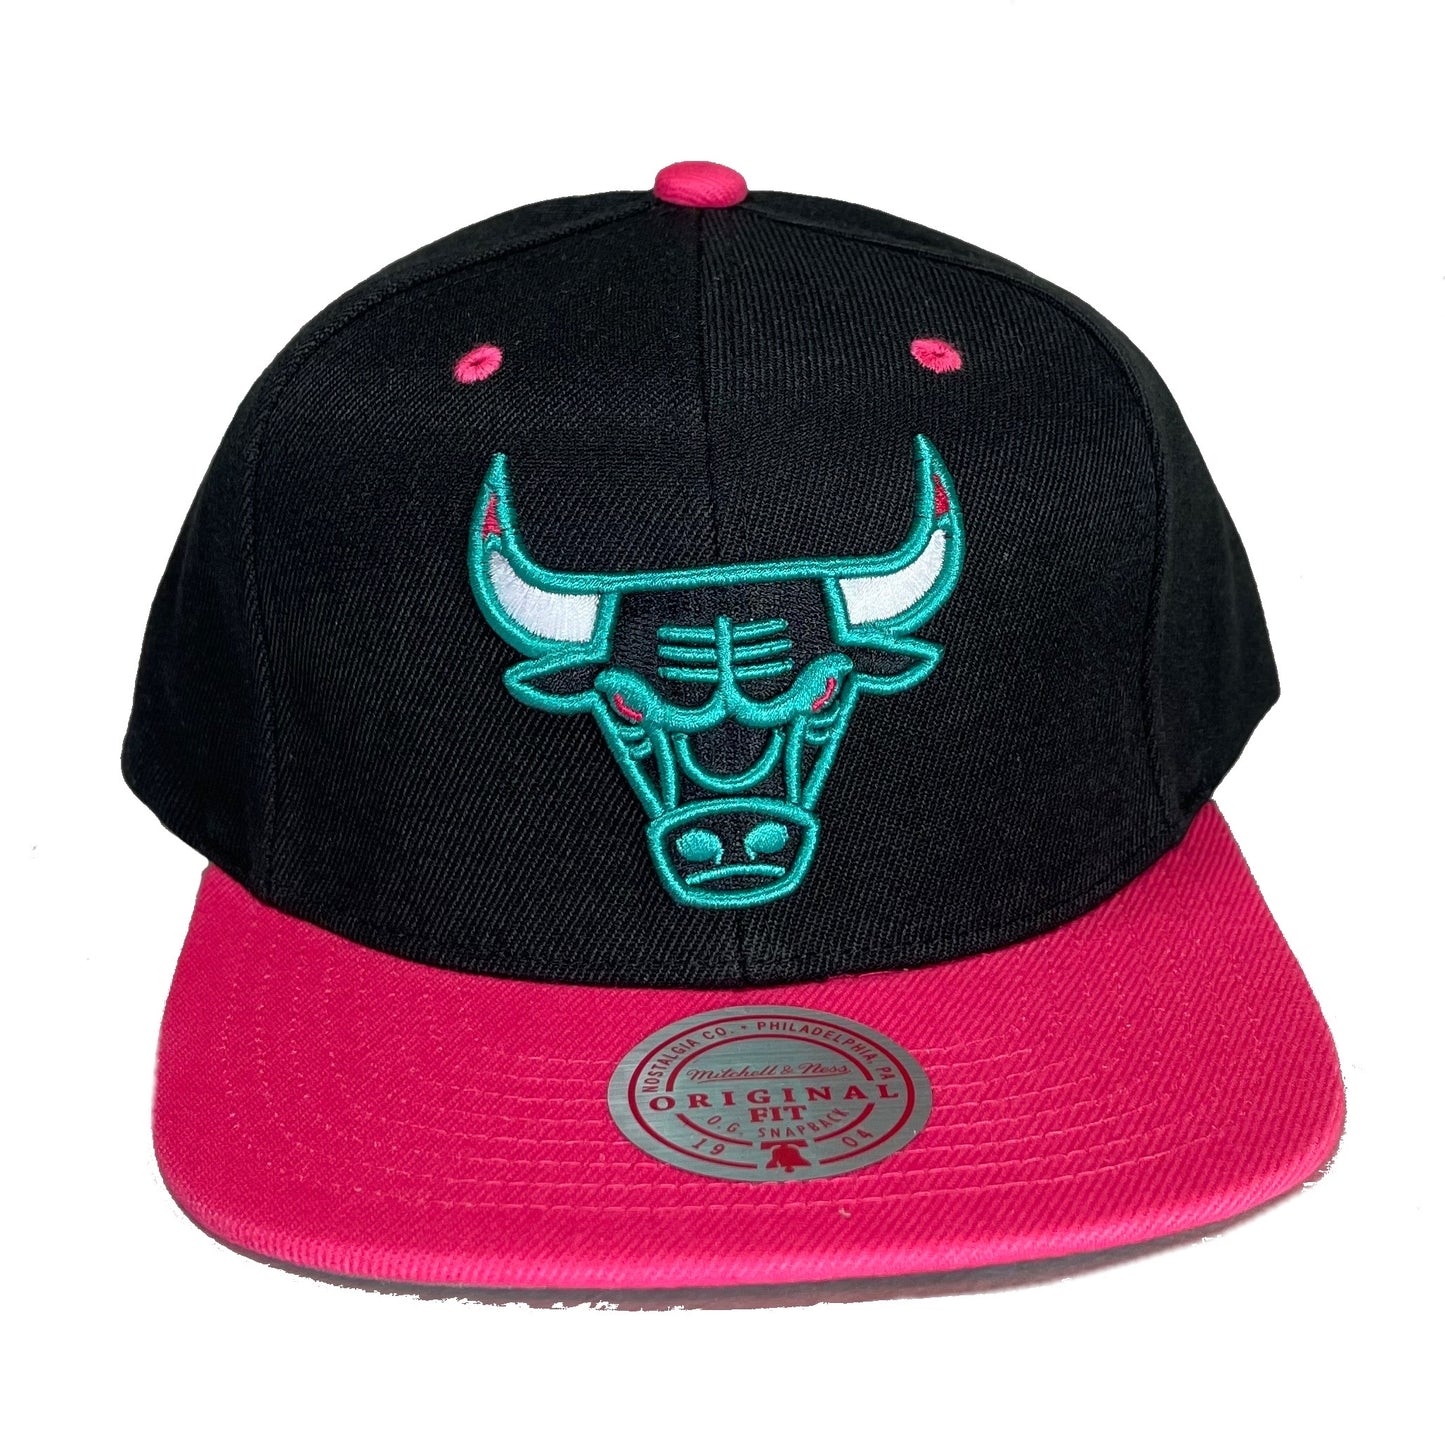 Chicago Bulls (Black/Hot Pink) Snapback